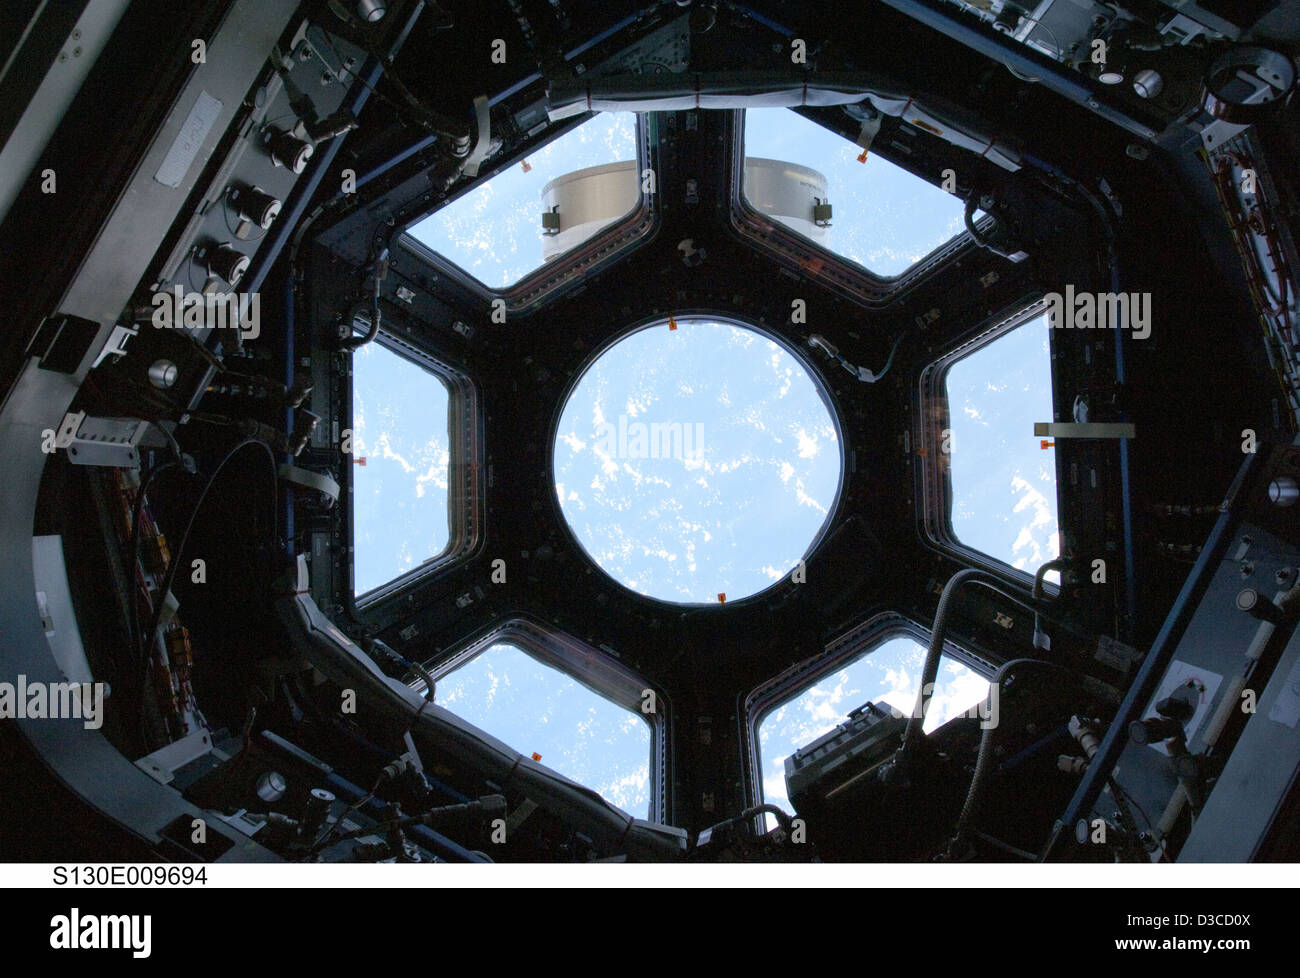 Crew Earth Observation Crewearthobservation Kuppel internationale Raumstation Internationalspacestation Nasa Station Wissenschaft st Stockfoto